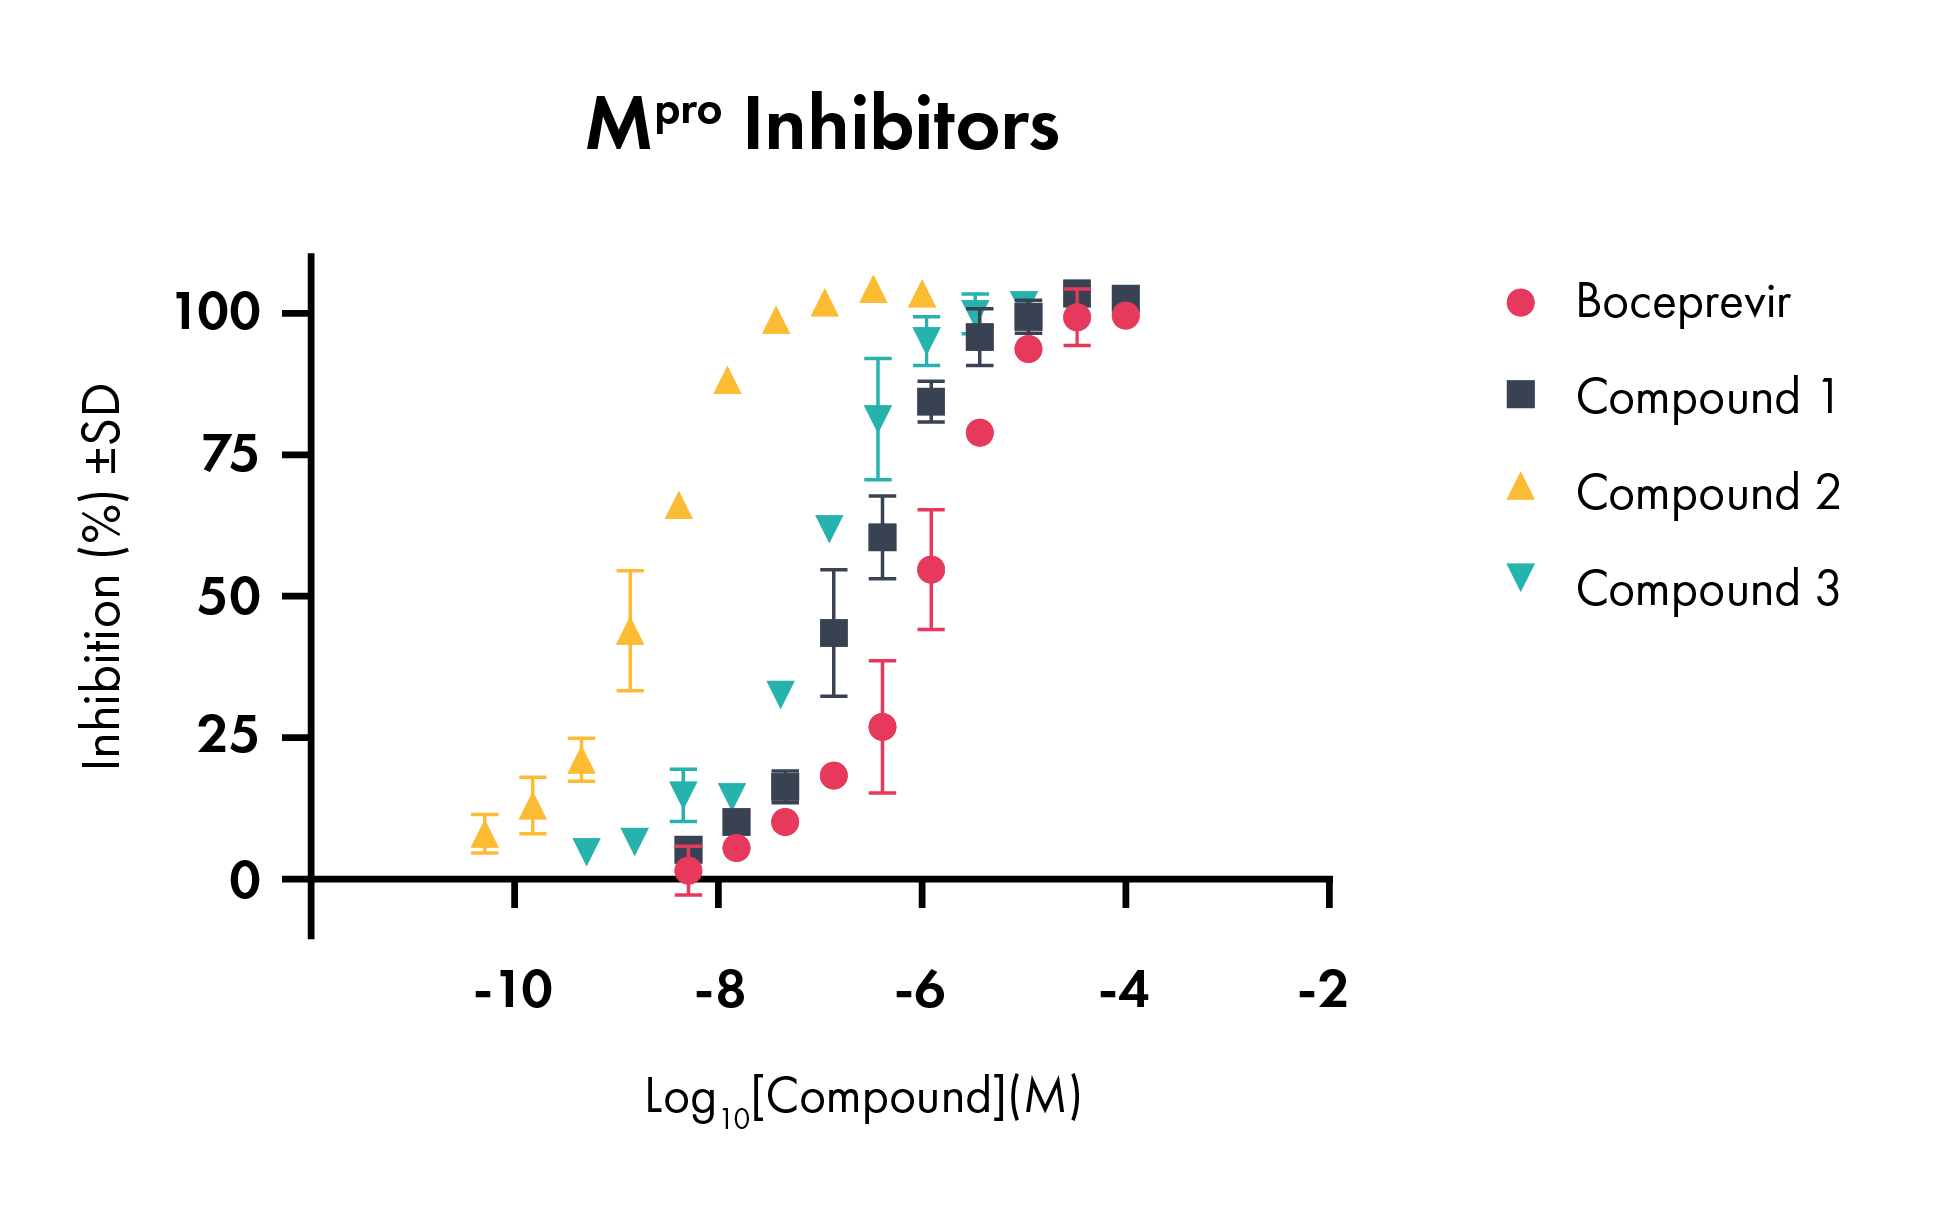 Mpro Inhibitors